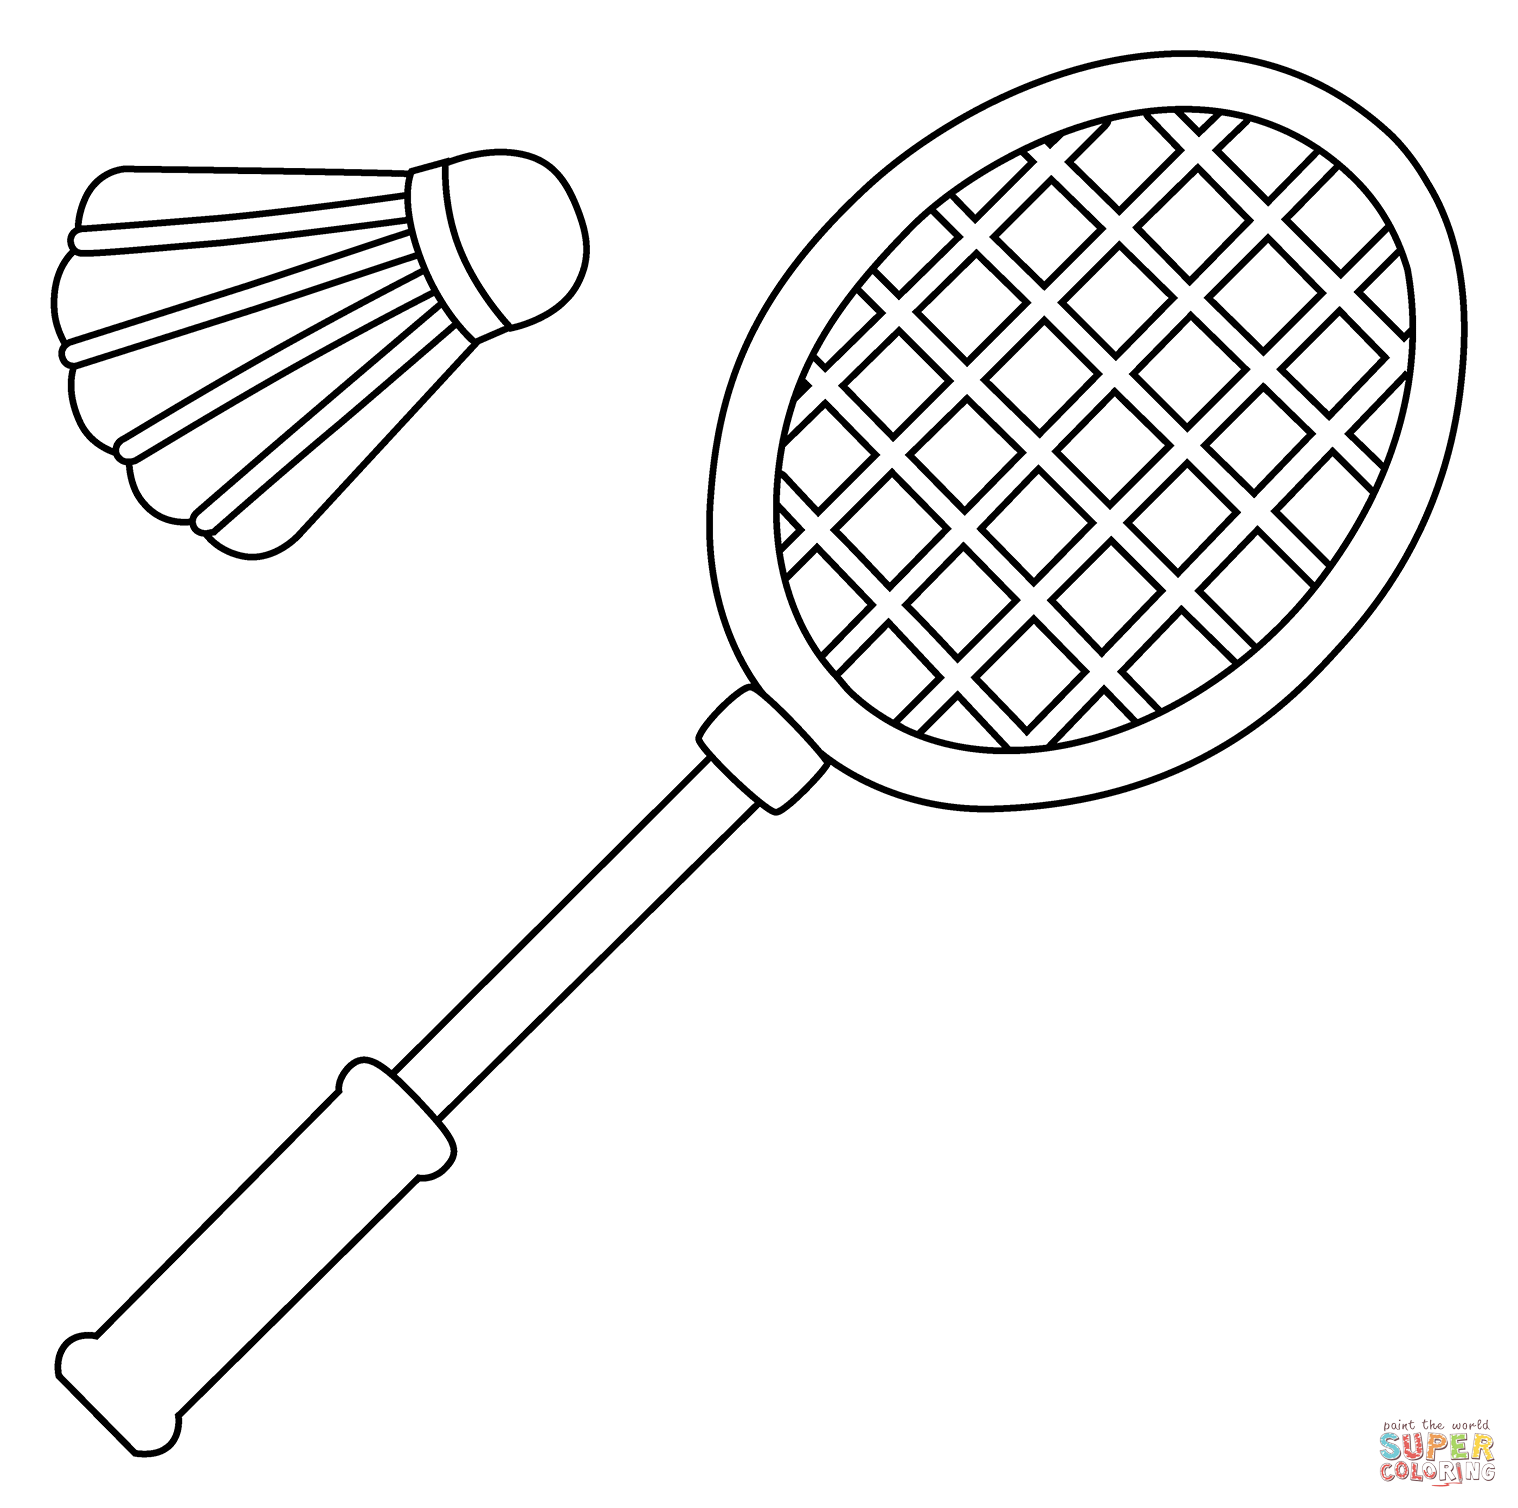 Badminton Emoji coloring page | Free Printable Coloring Pages